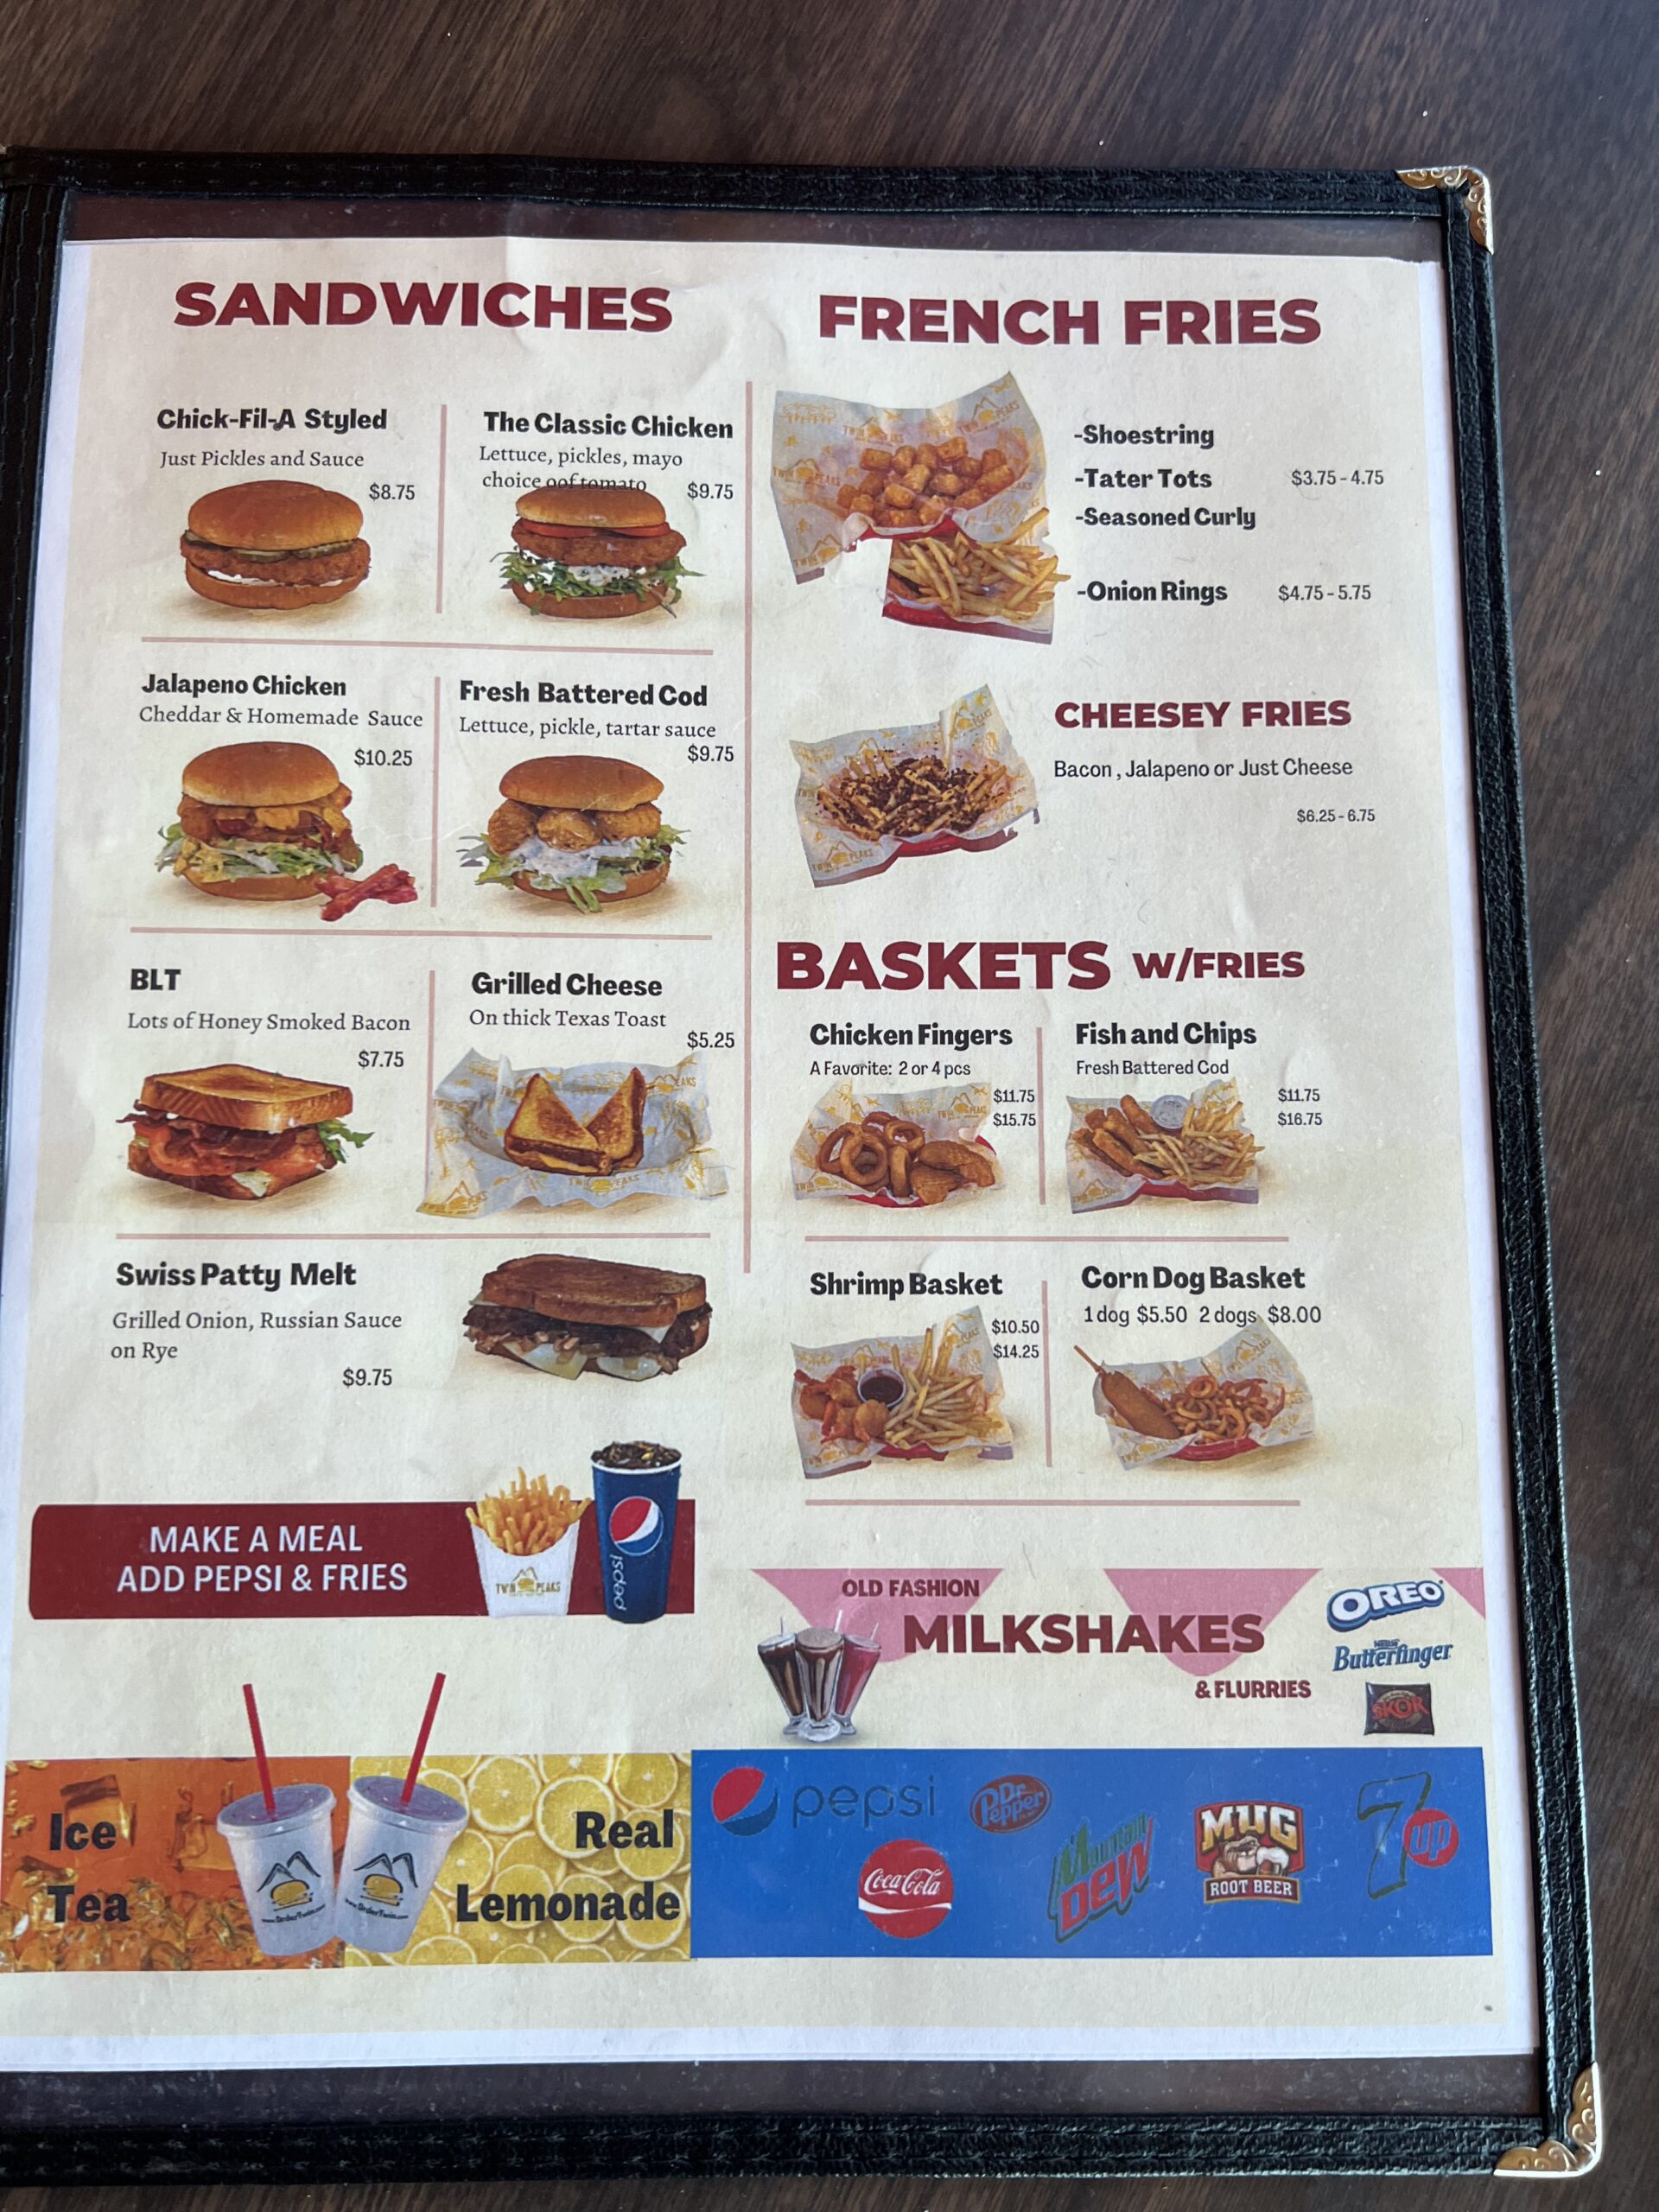 Twin Peaks Menu: Sandwiches, French Fries, Baskets and Milkshakes